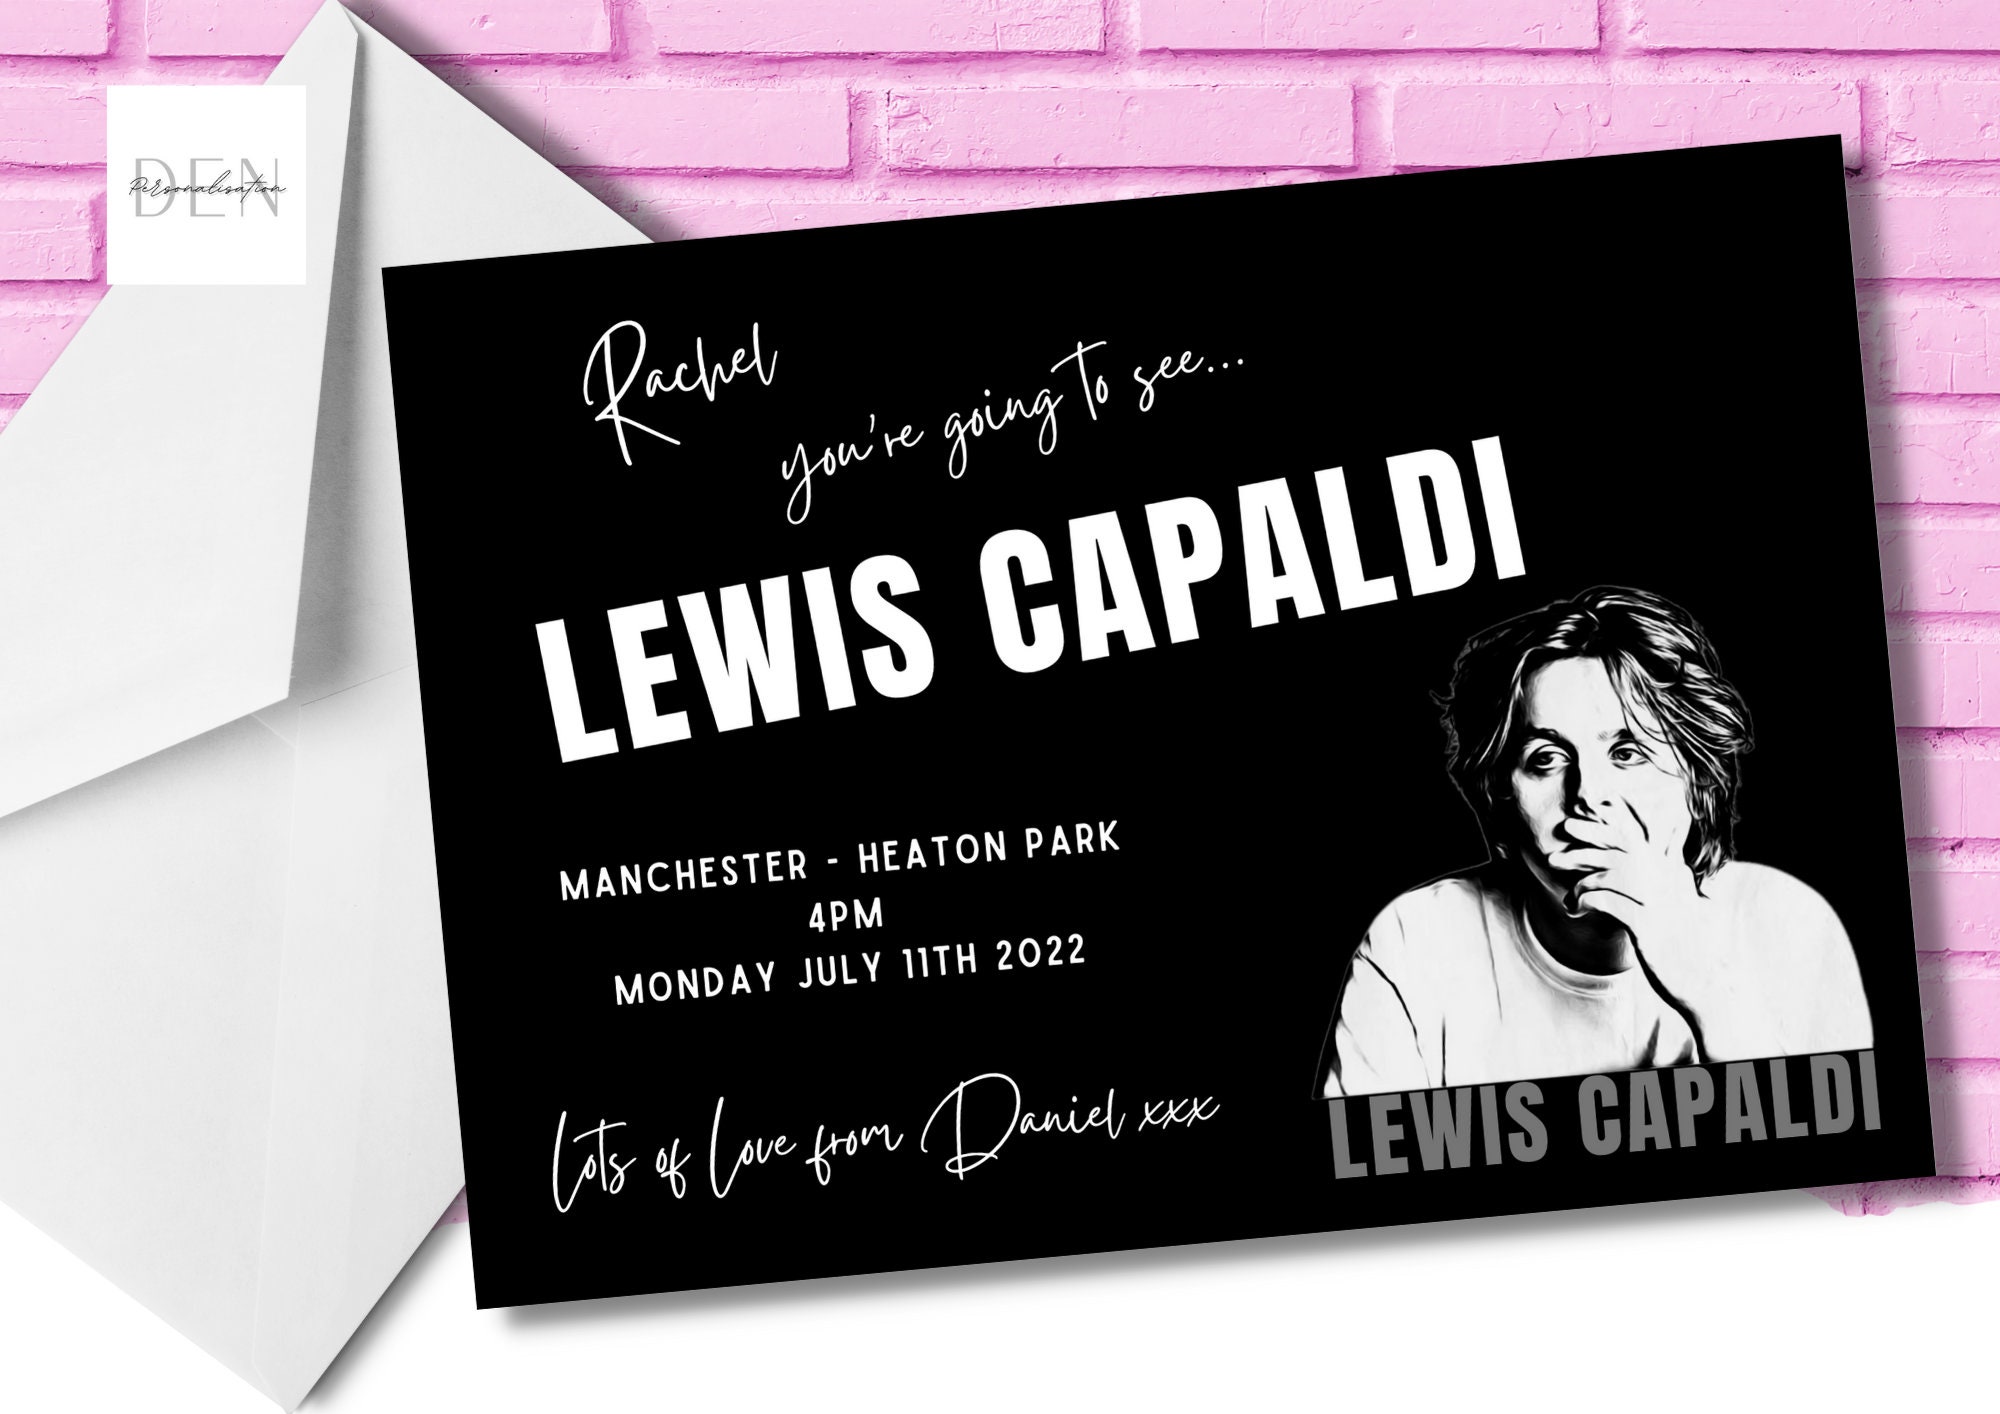 Lewis Capaldi tickets